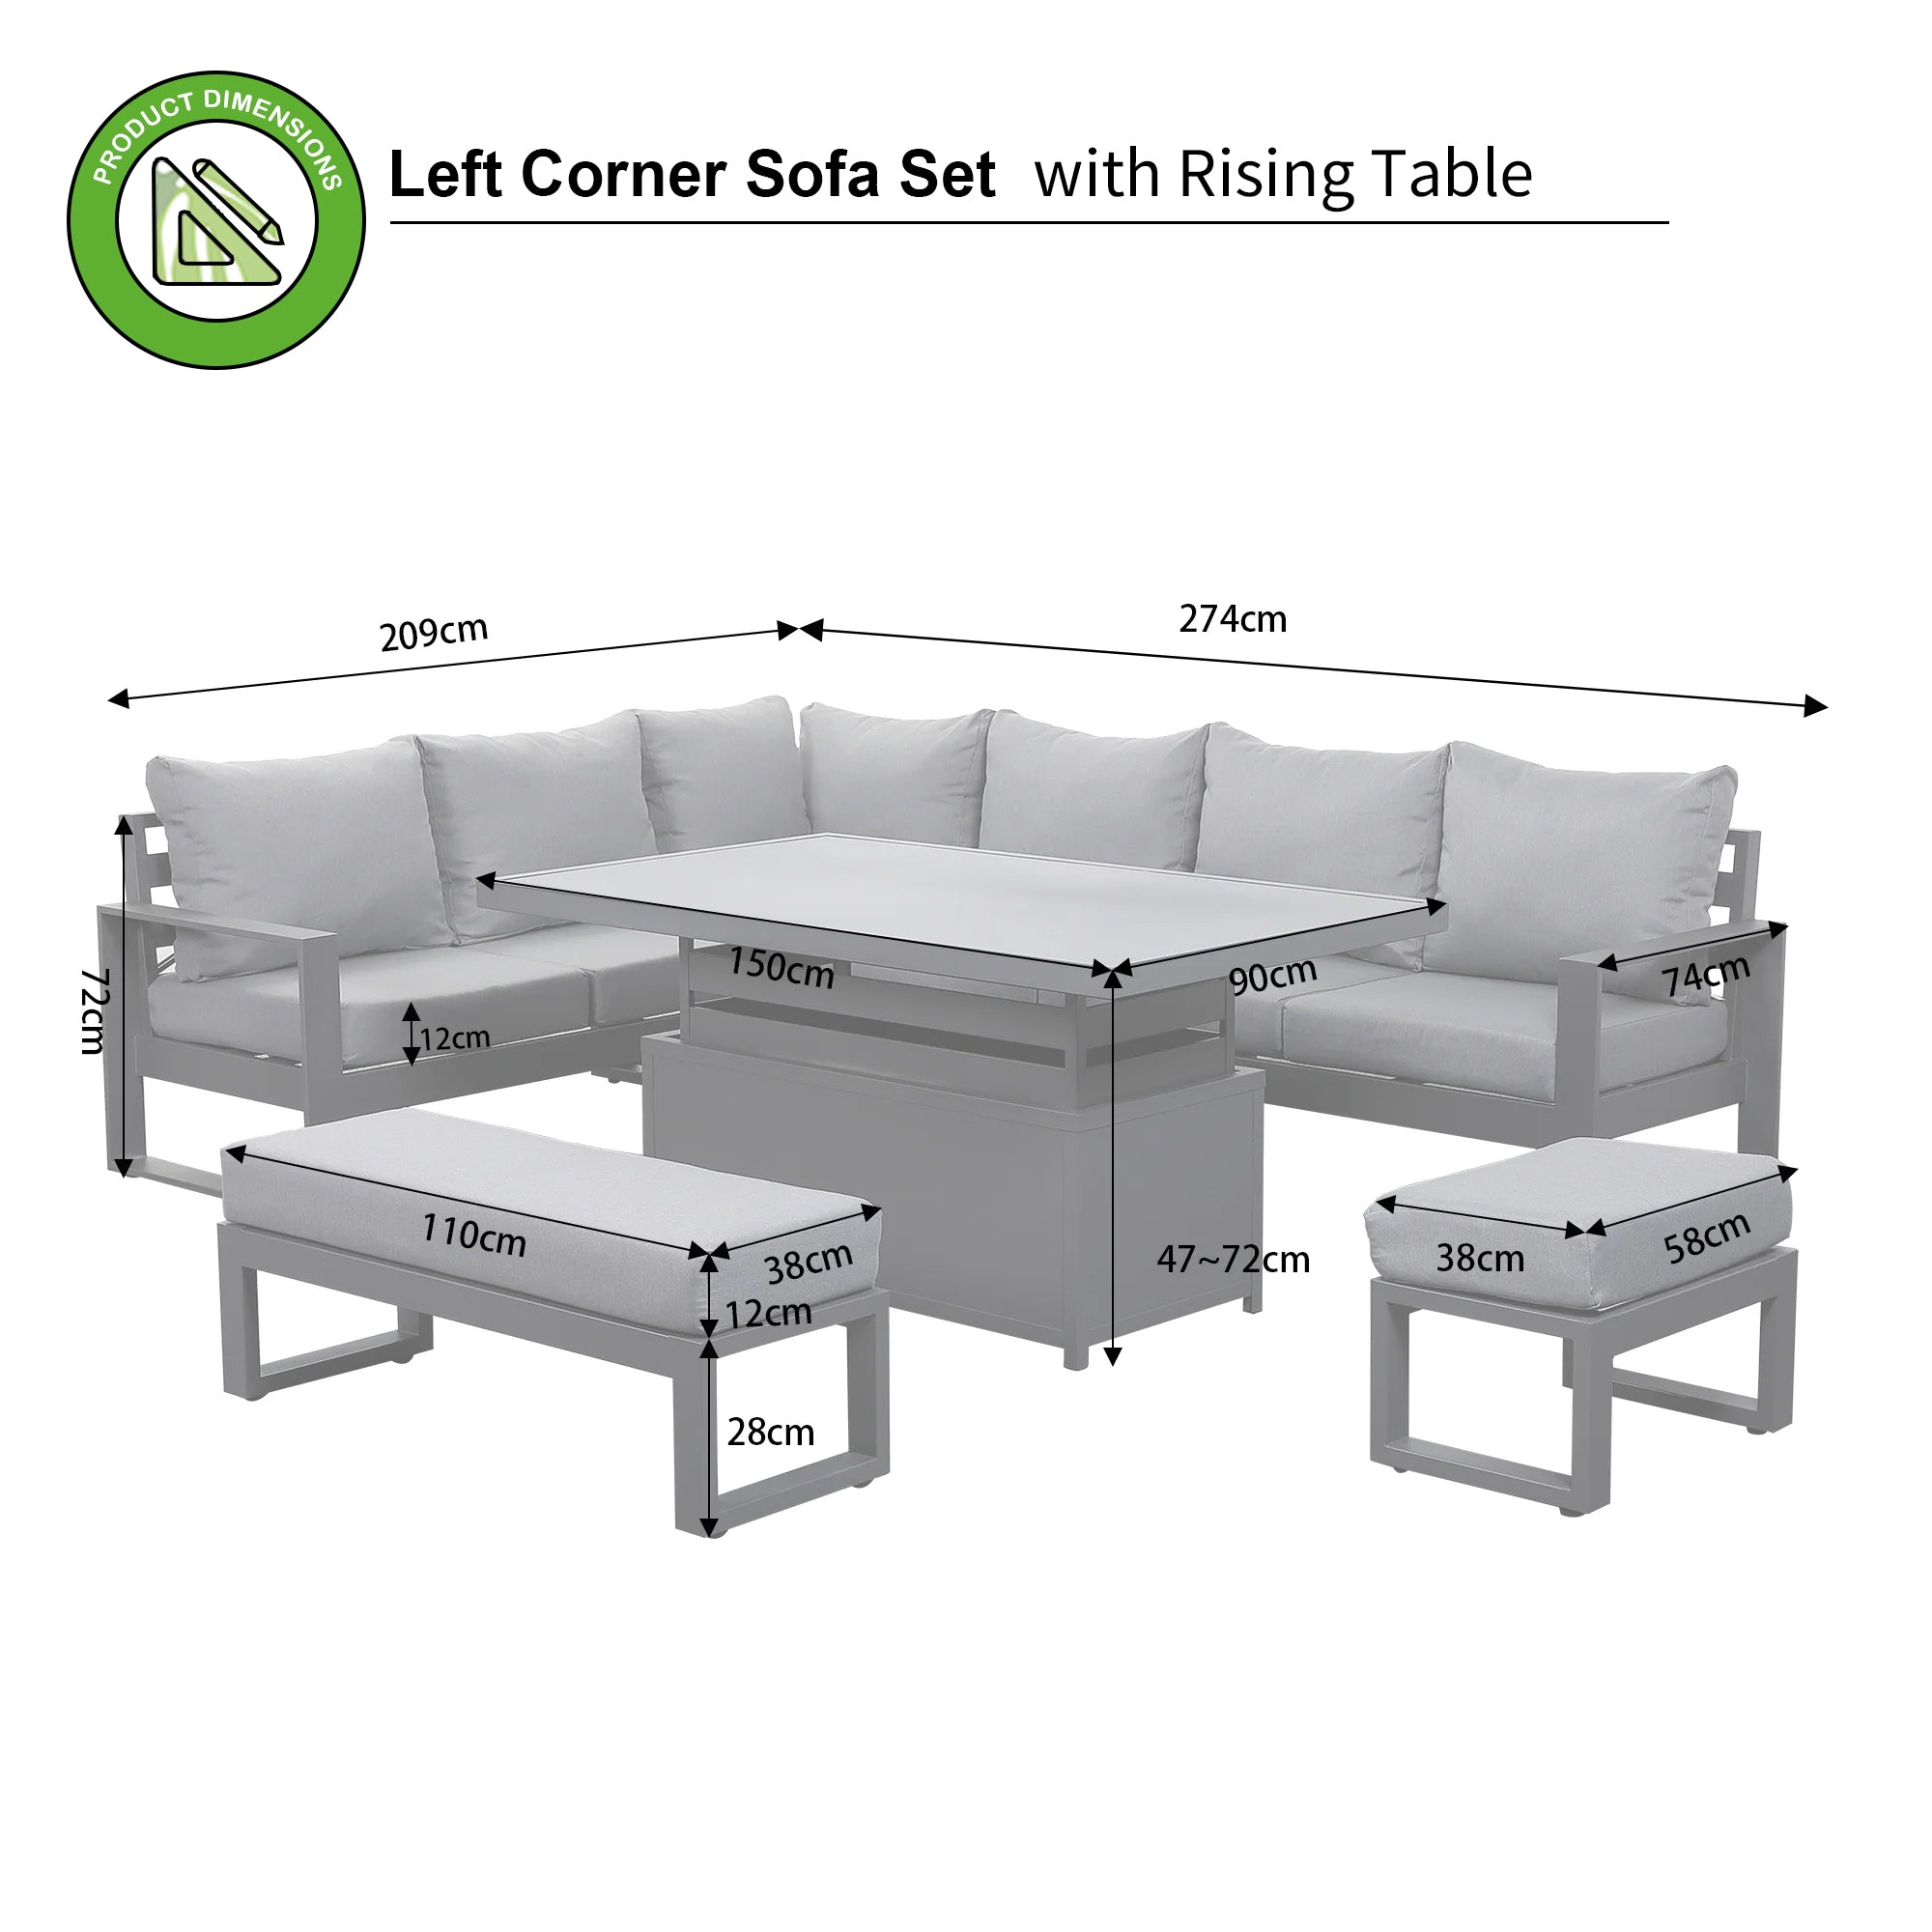 HL01..Halo Range Left Hand Corner Sofa Set - Charcoal Aluminium Frame with Grey cushions